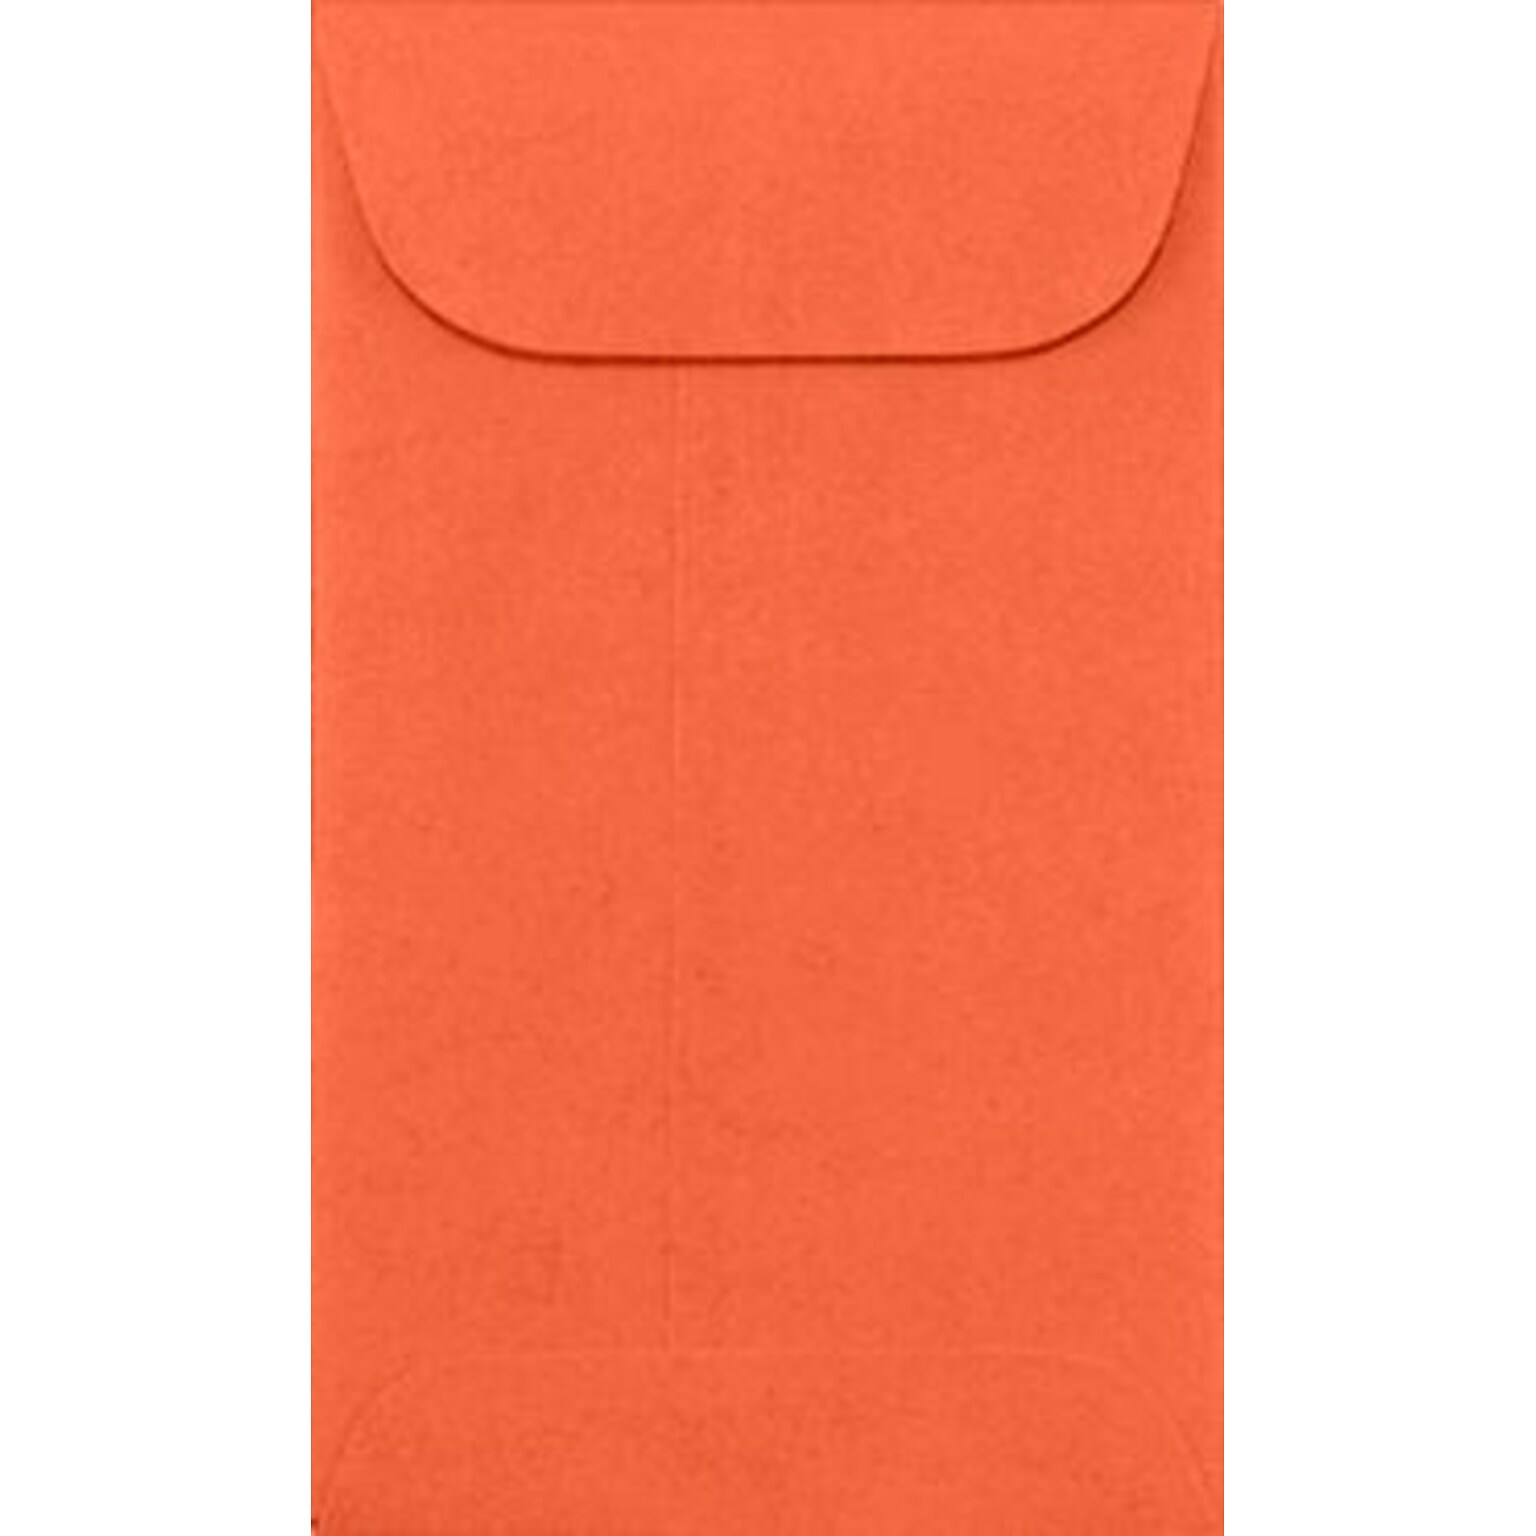 LUX #5 1/2 Coin Envelopes (3 1/8 x 5 1/2) 250/Box, Bright Orange (512CO-BO-250)